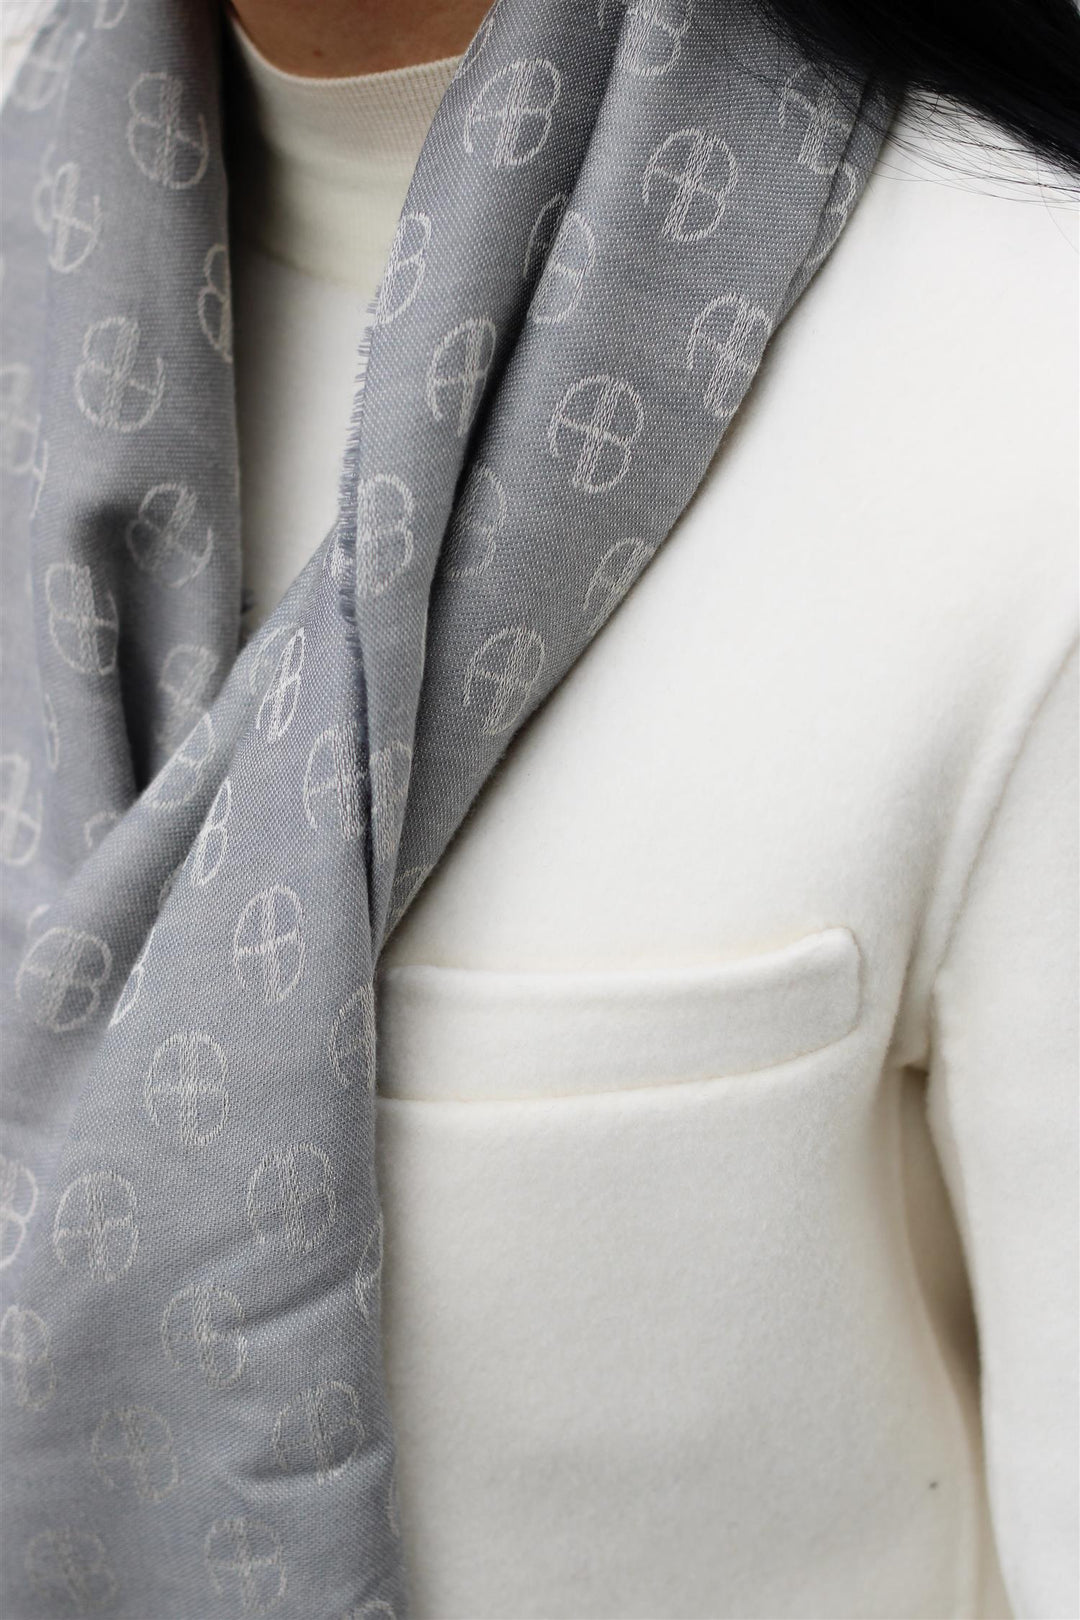 Anine Bing - Saige scarf grey and cream monogram